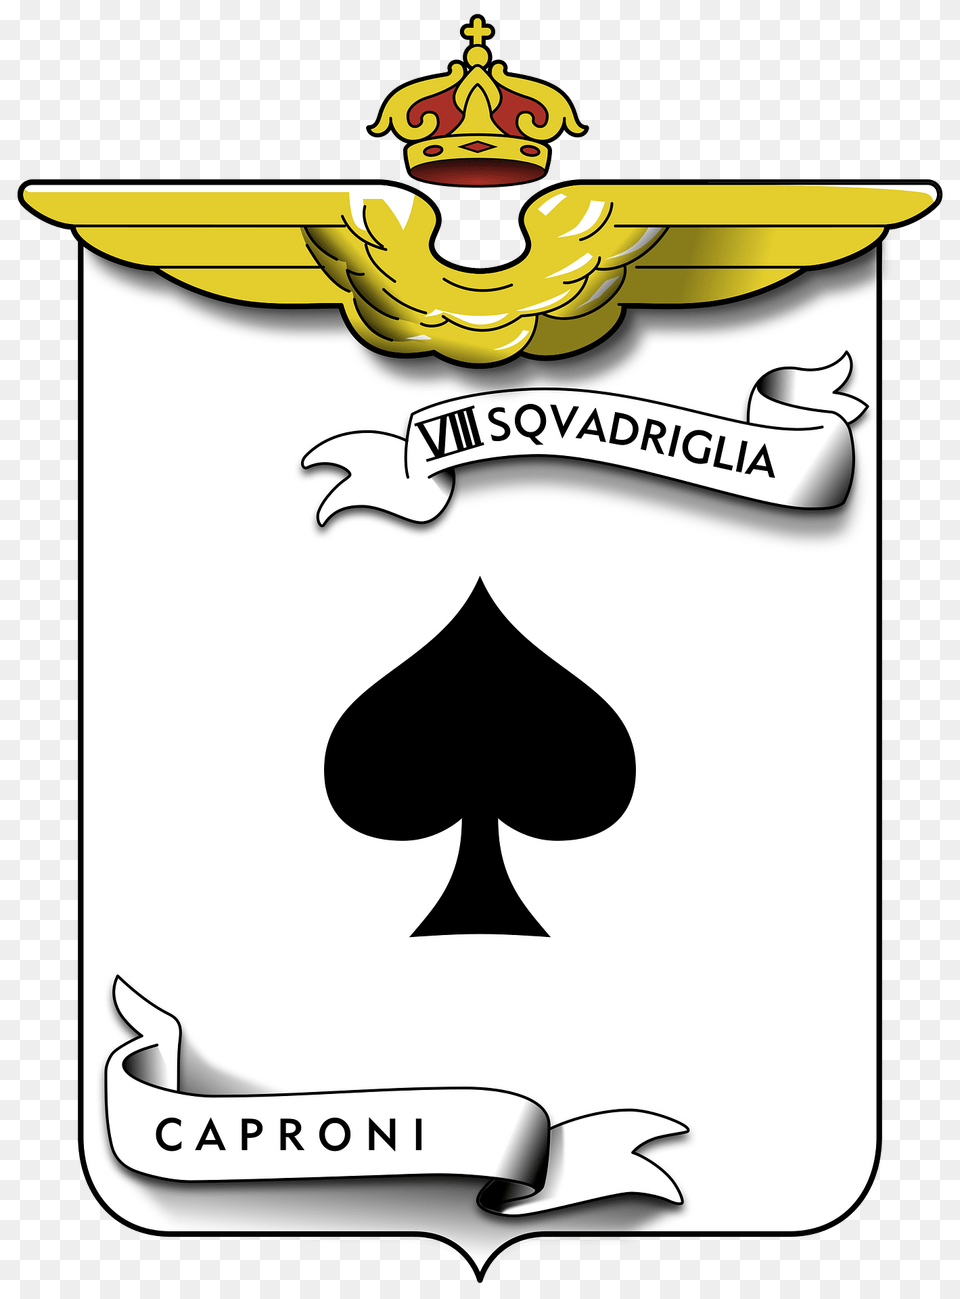 Coa Viii Squadriglia Caproni Spade Clipart, Logo, Symbol, Text, Smoke Pipe Png Image